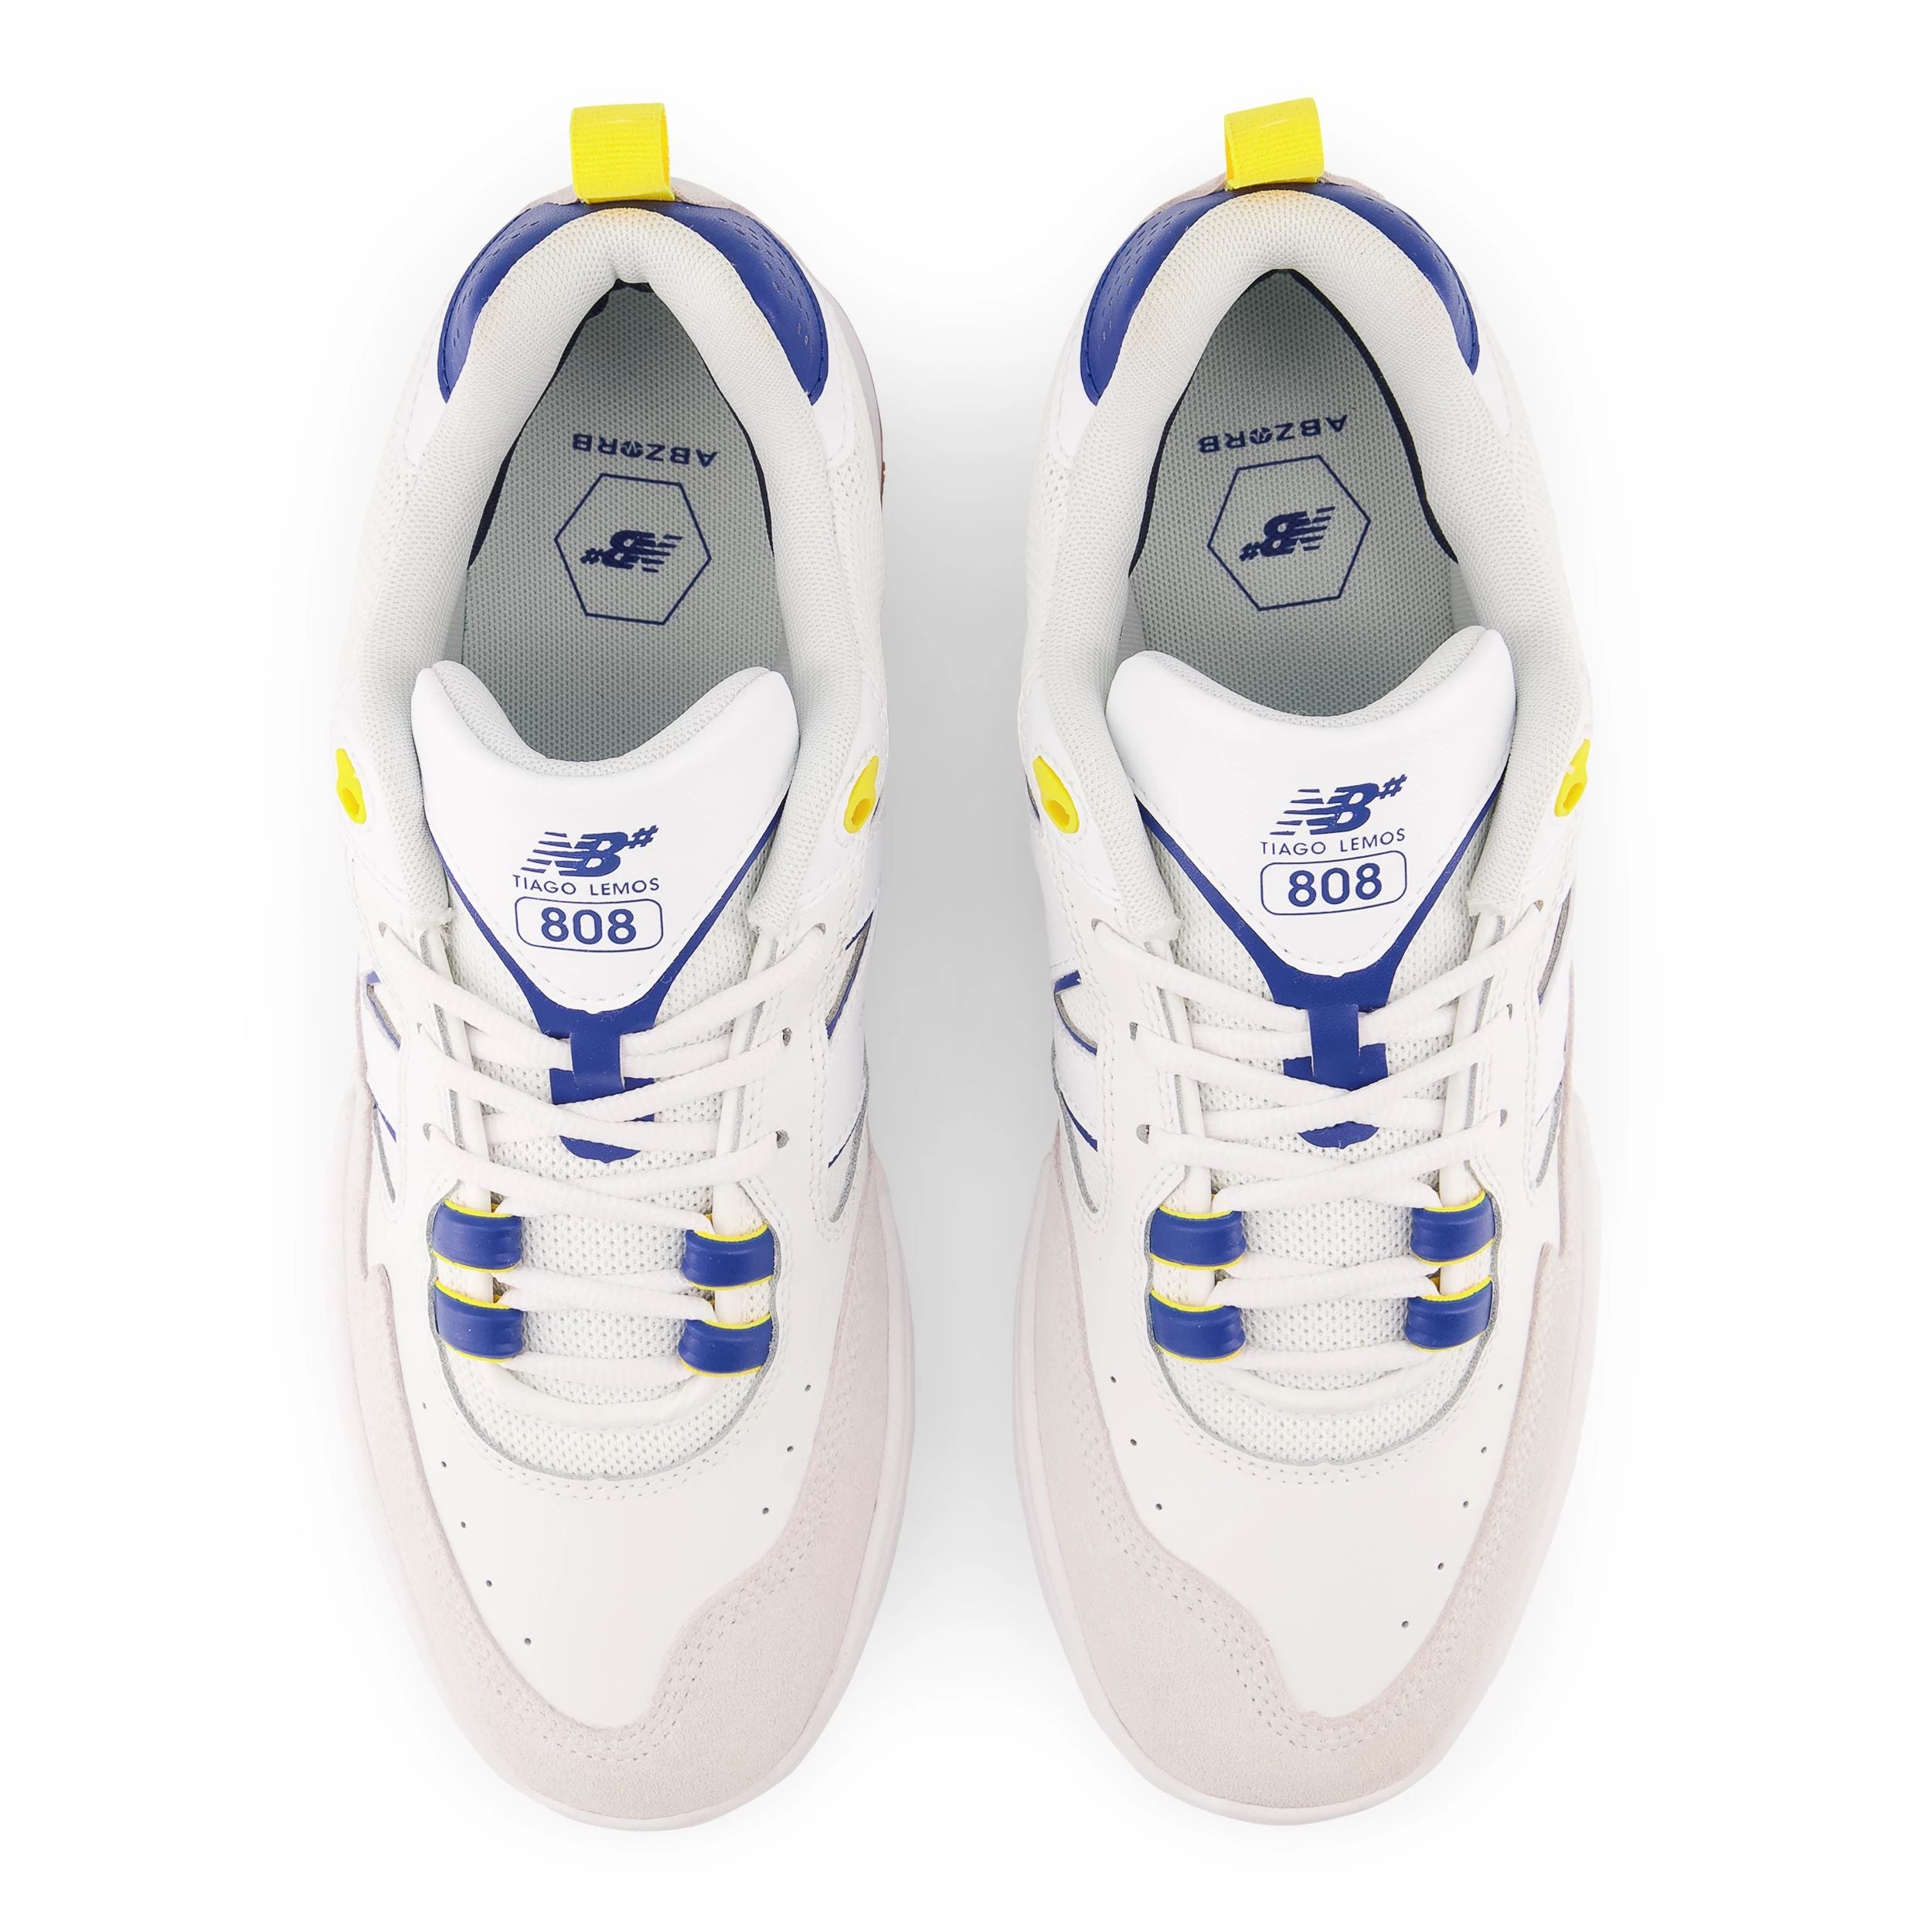 White/Blue NM808 Tiago Lemos NB Numeric Skateboard Shoe Top